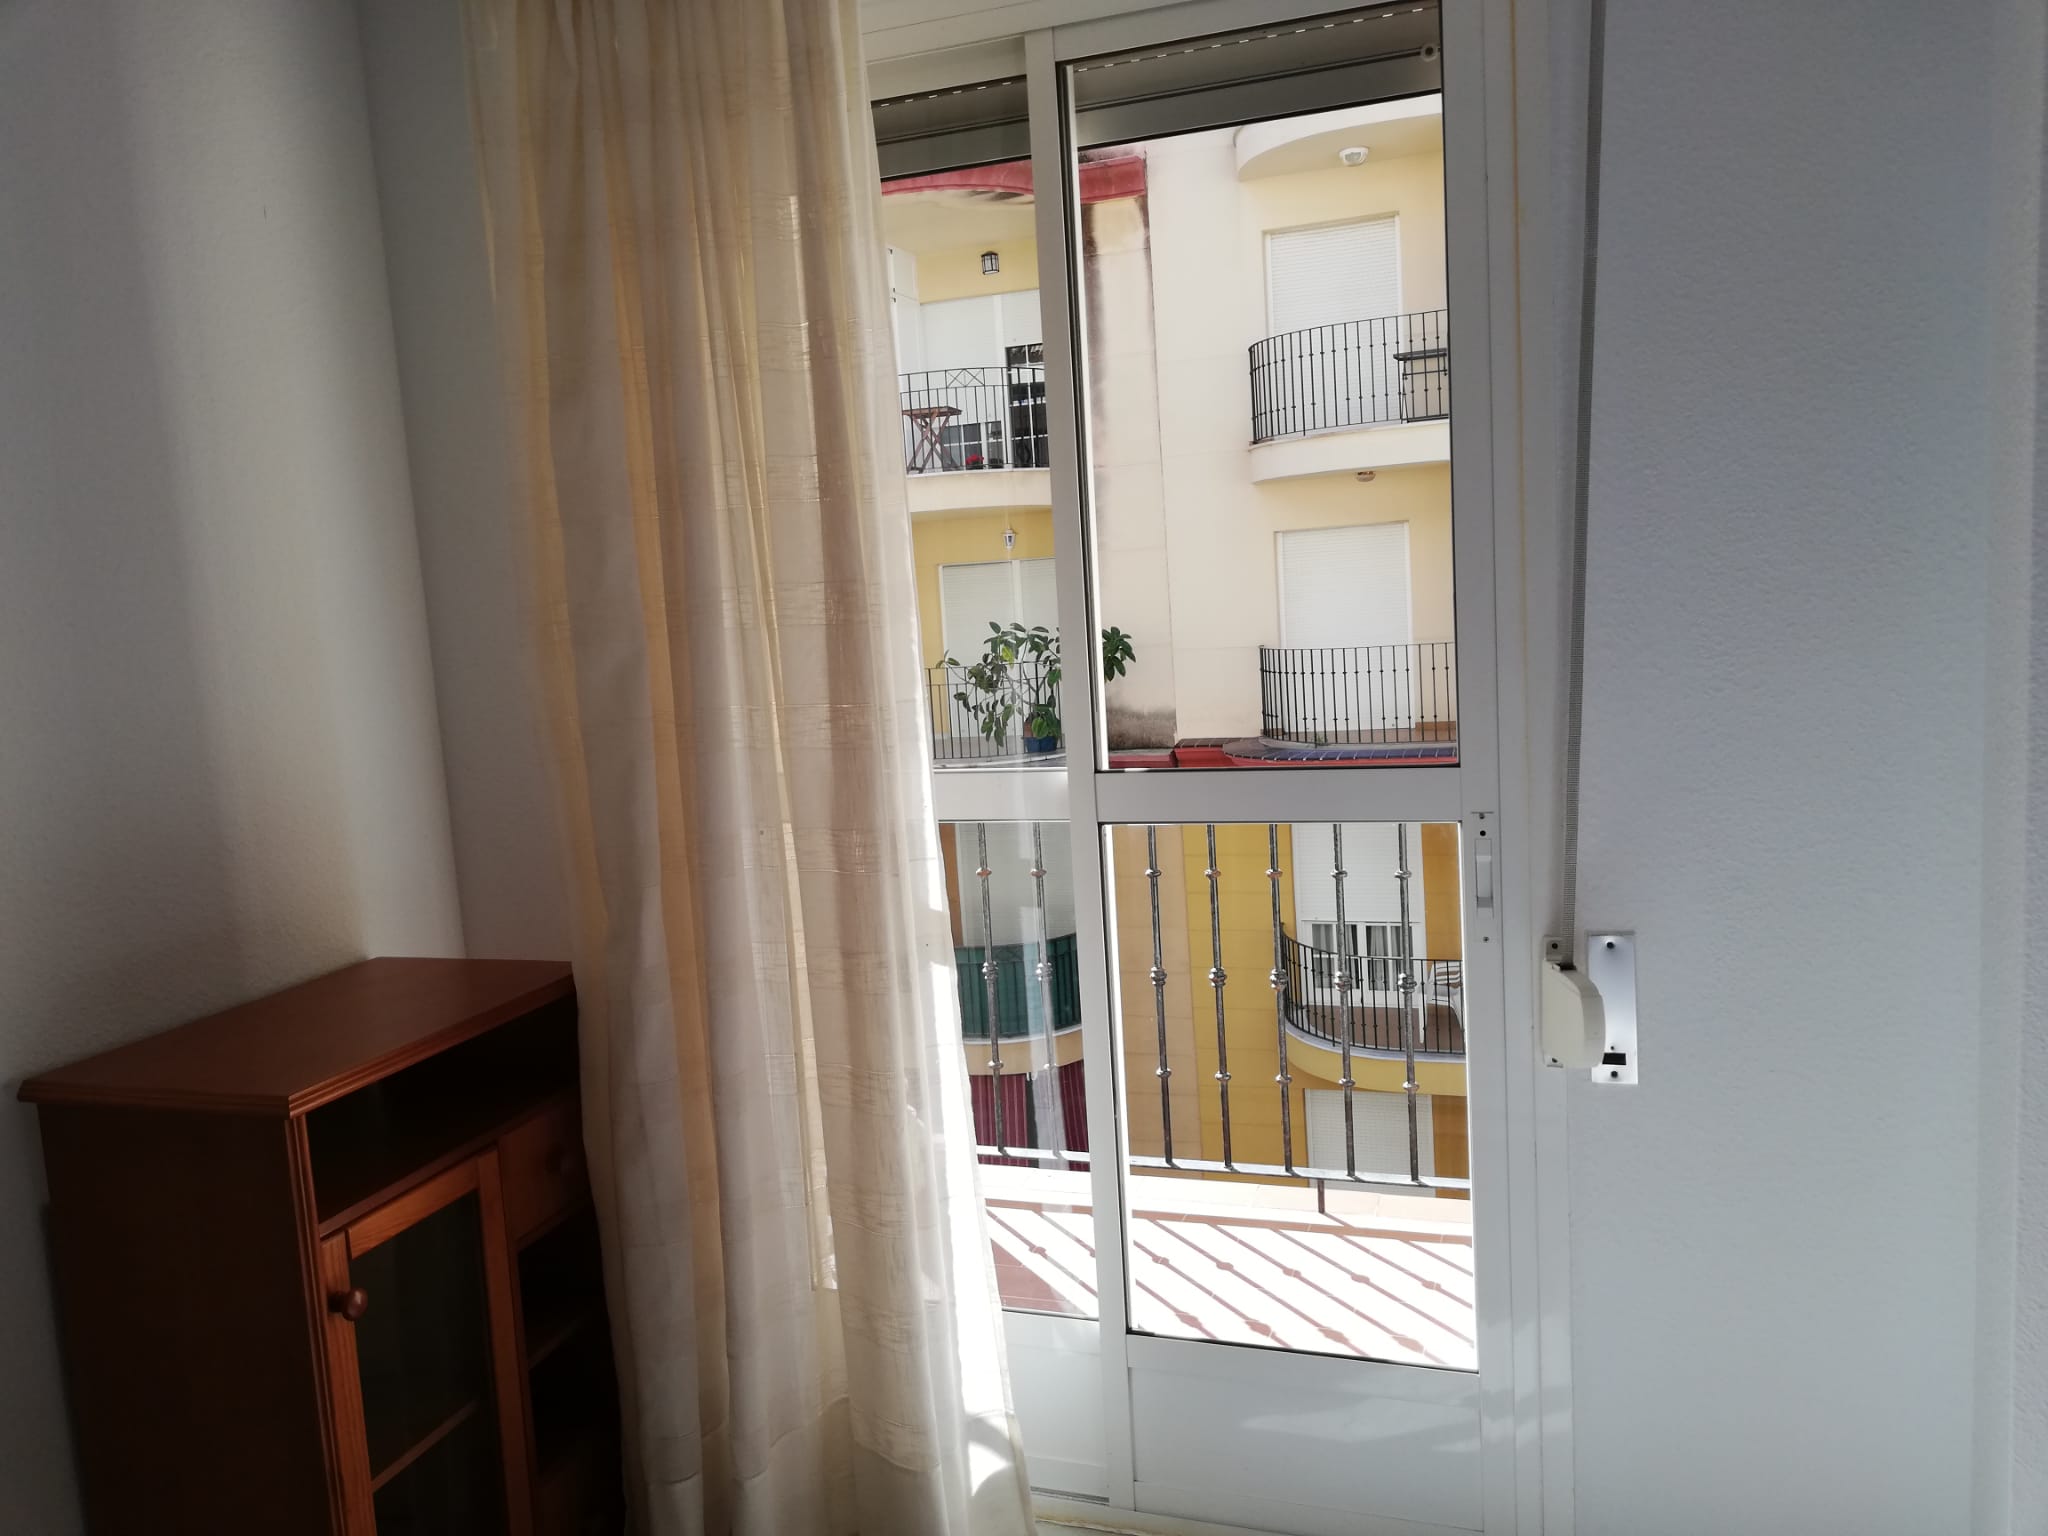 The 2-bedroom apartment for rent in av. Espana, Estepona - thumb - mibgroup.es